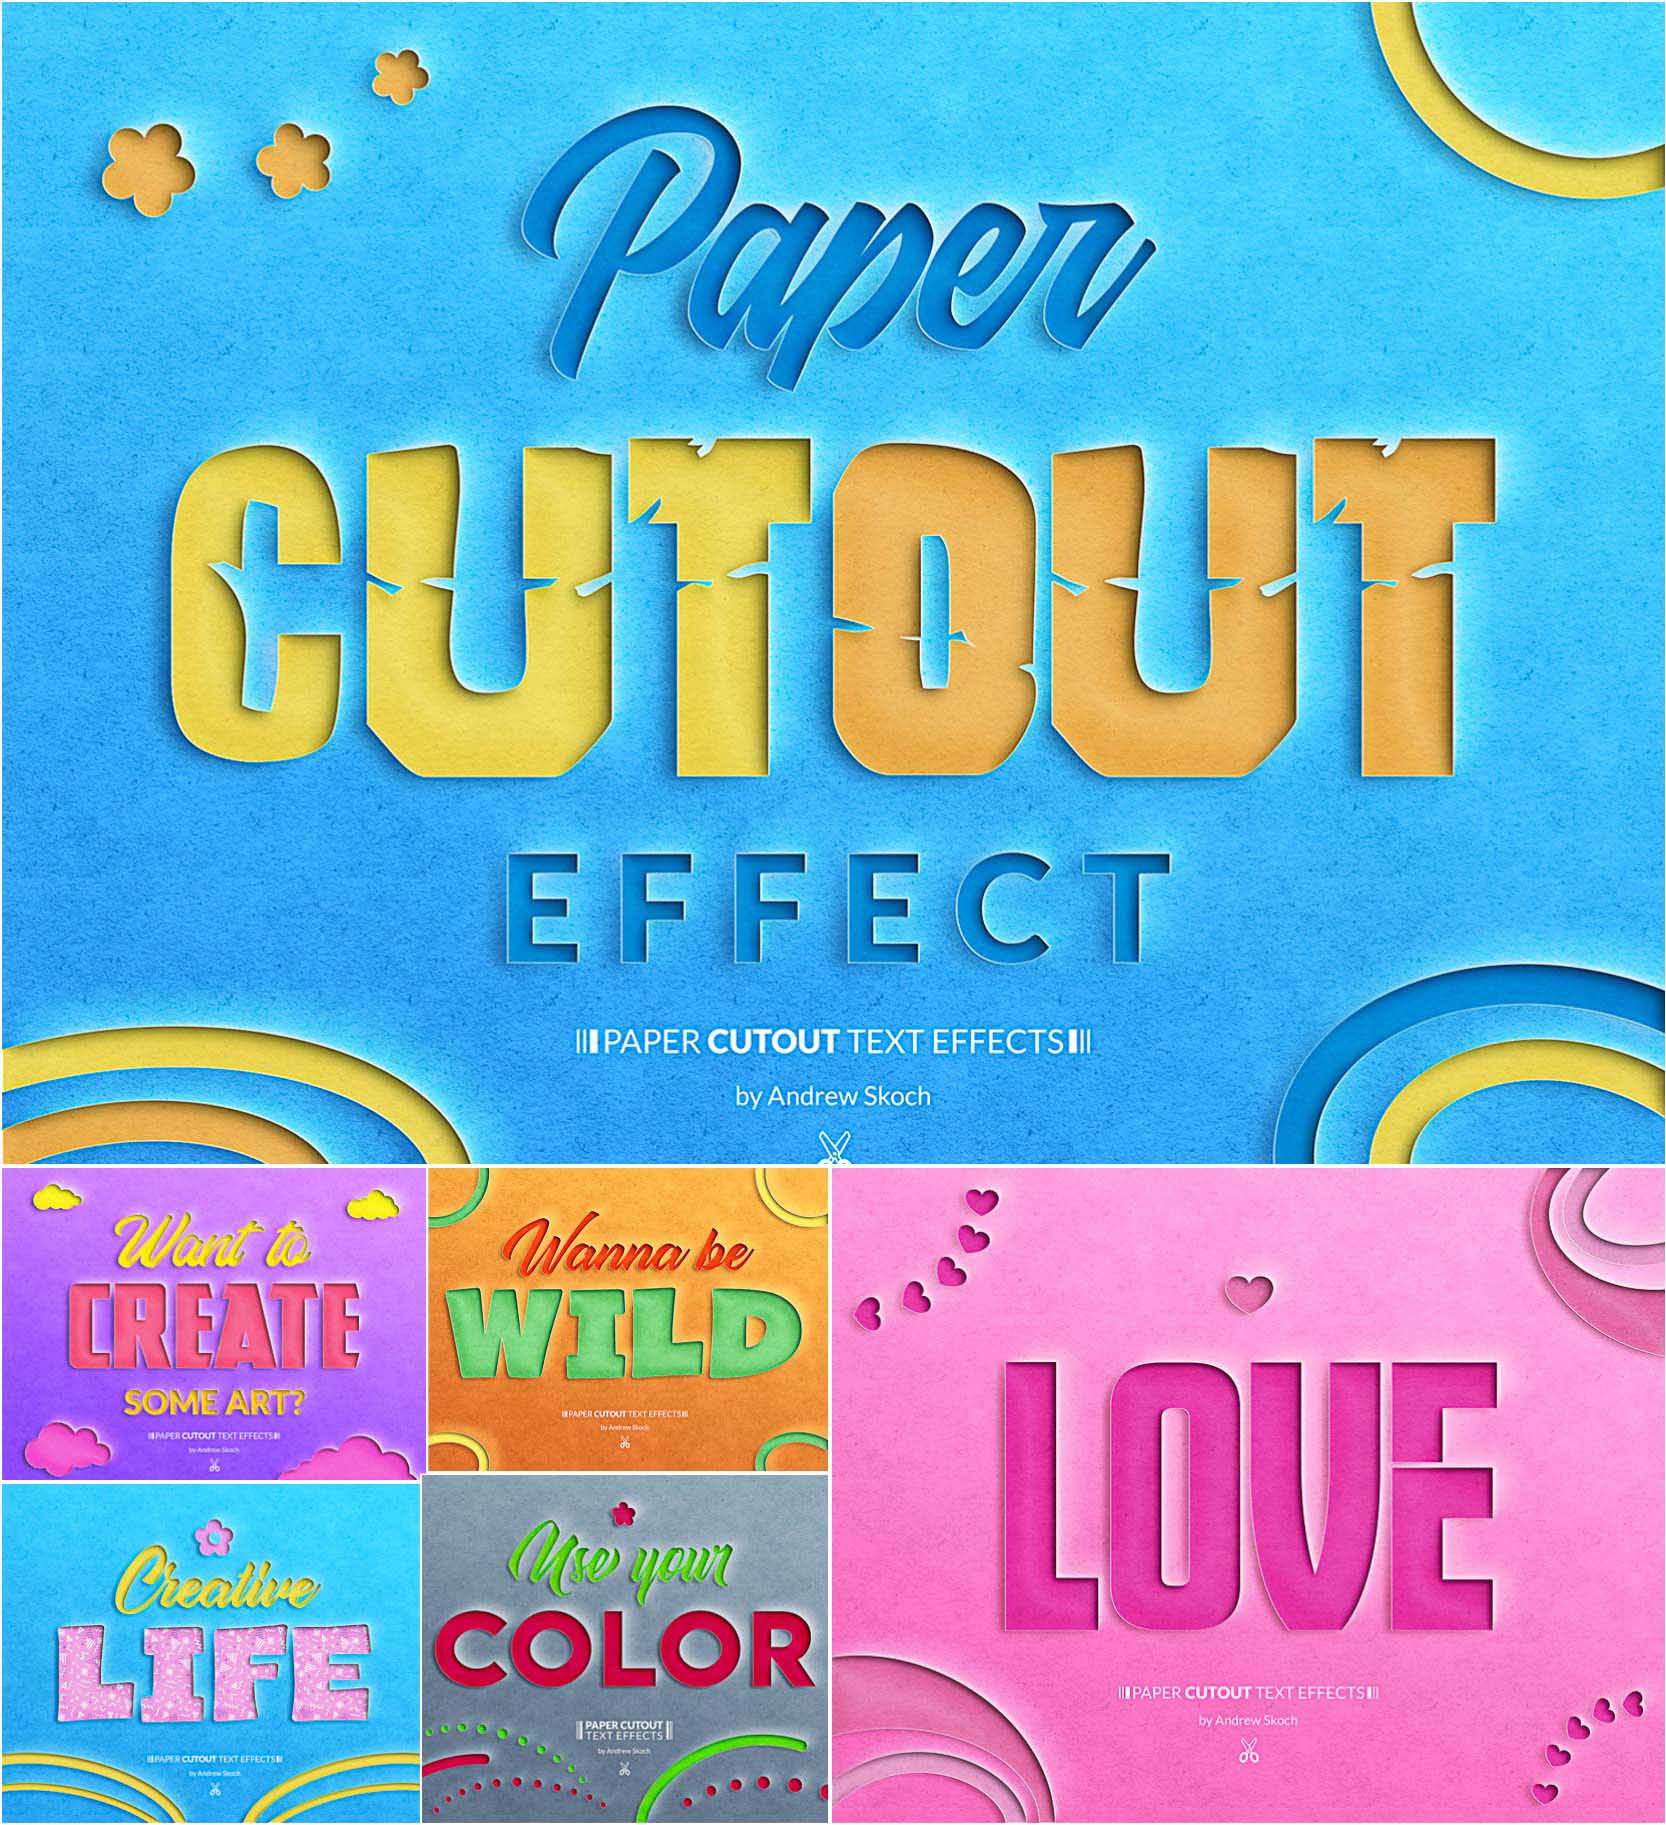 paper effect font